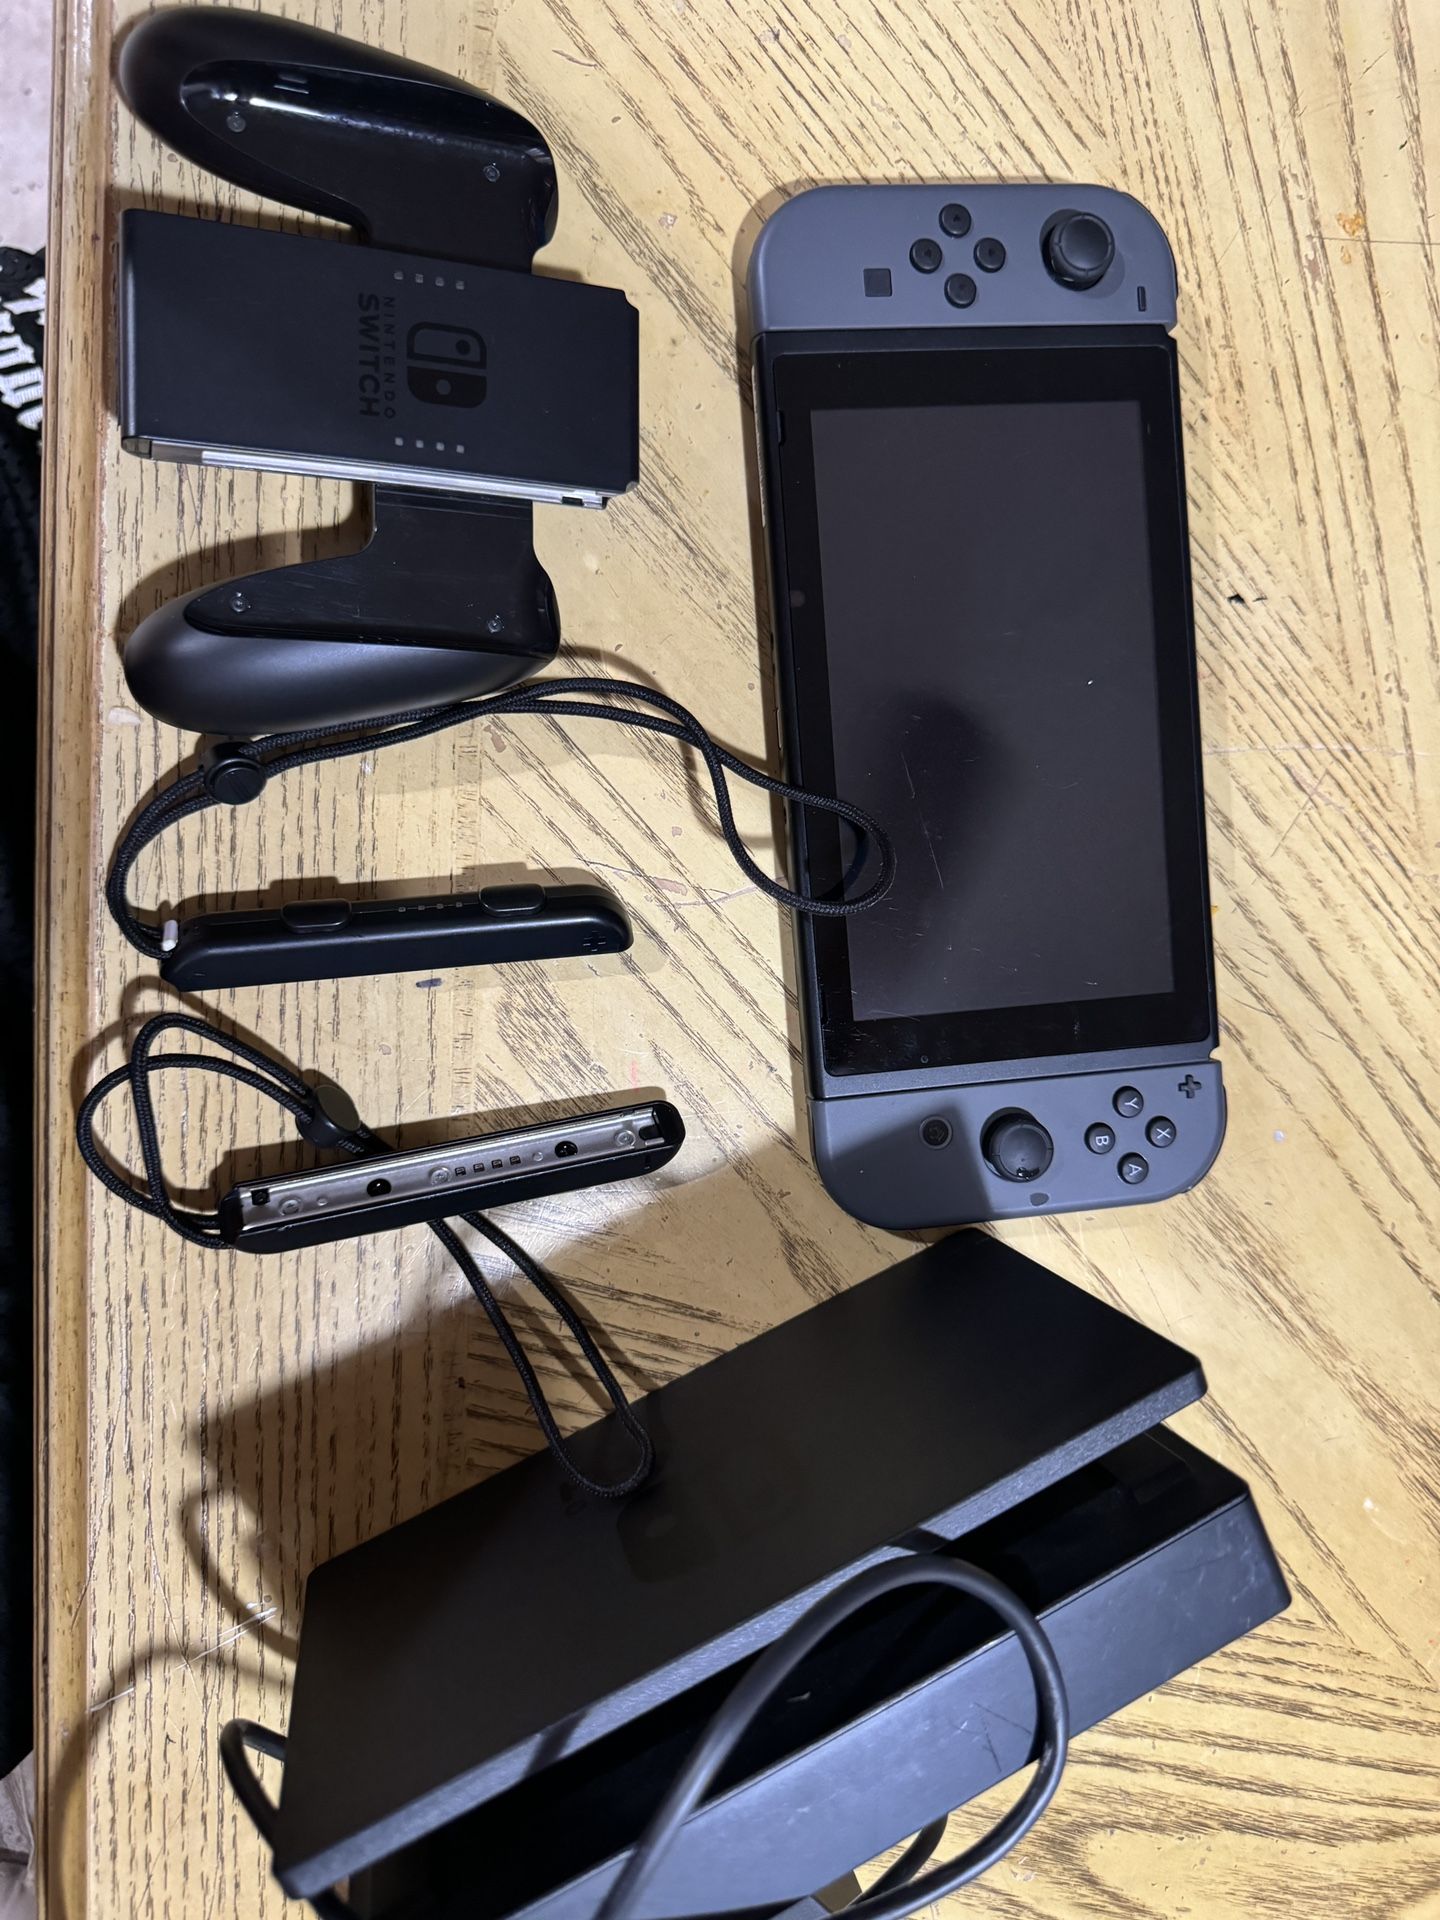 Nintendo switch (black version) 